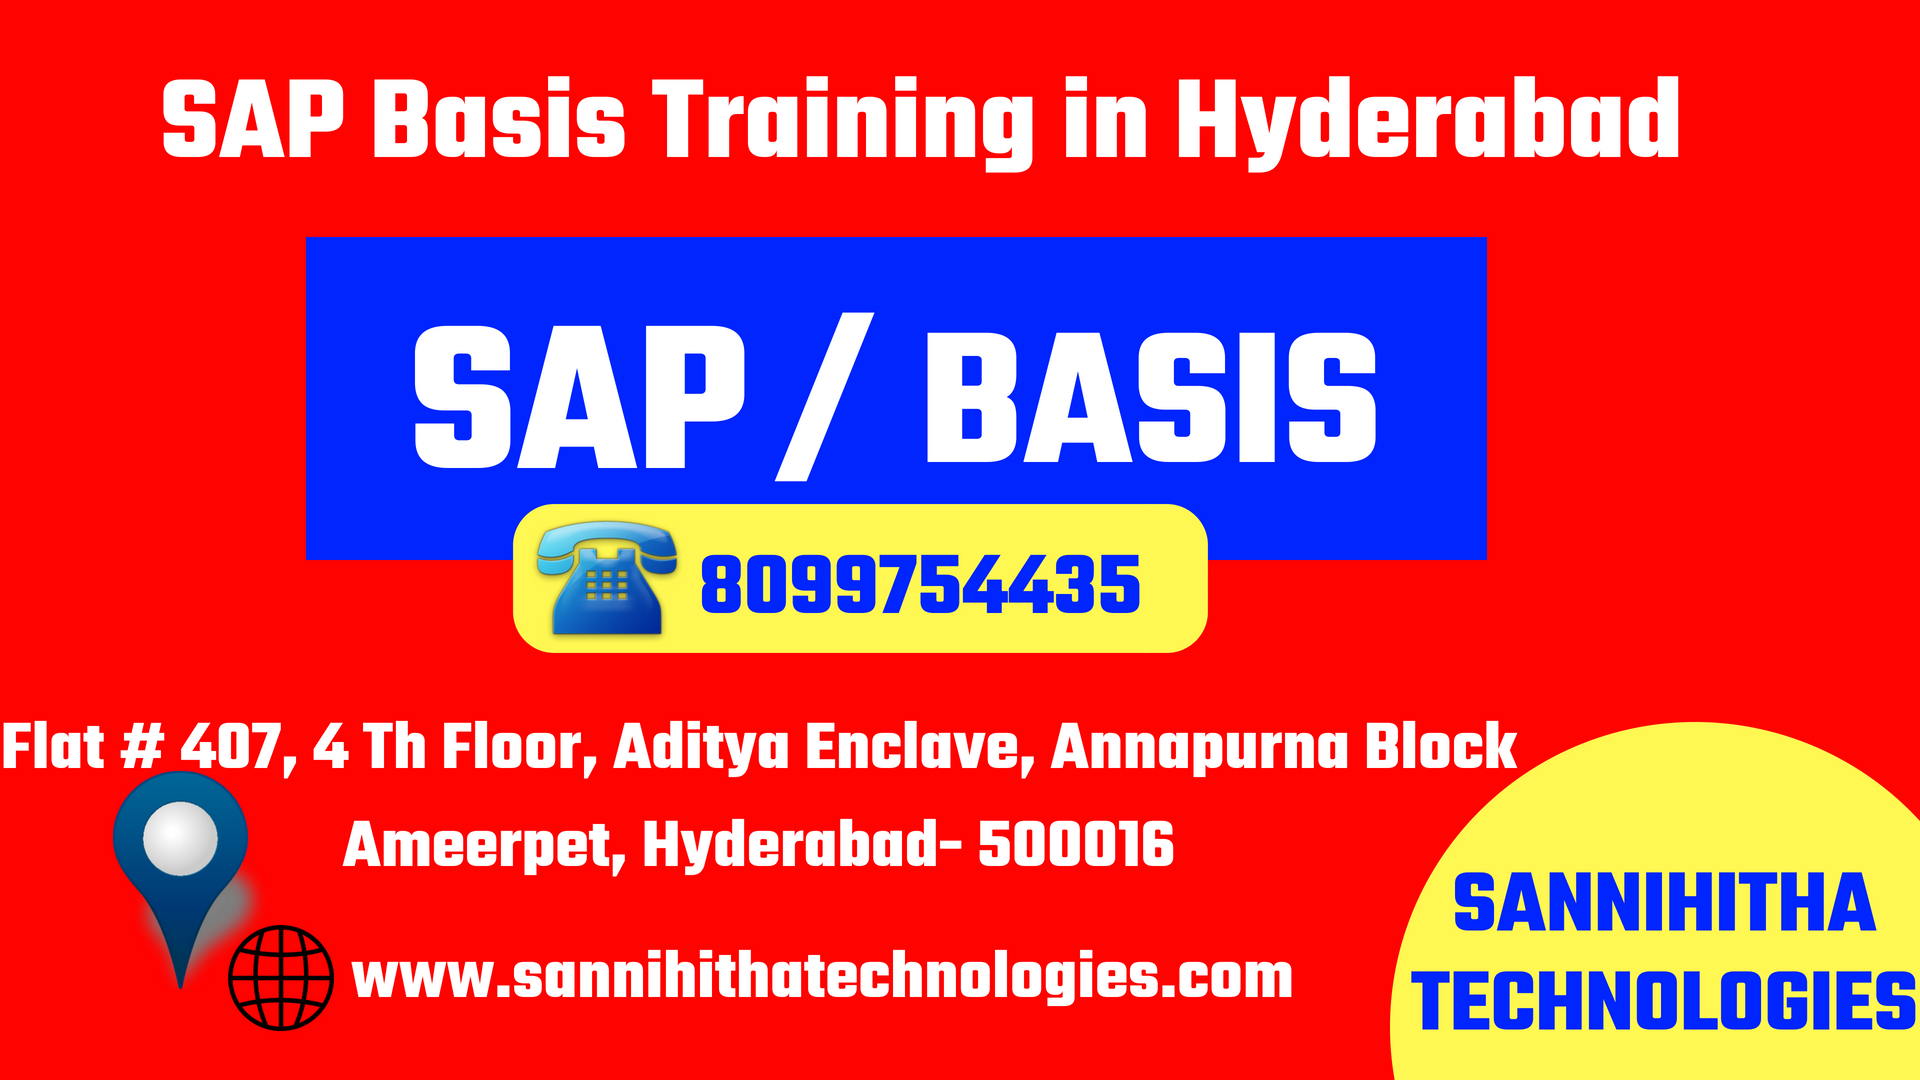 SAP Basis Training in Hyderabad, Hyderabad, Andhra Pradesh, India